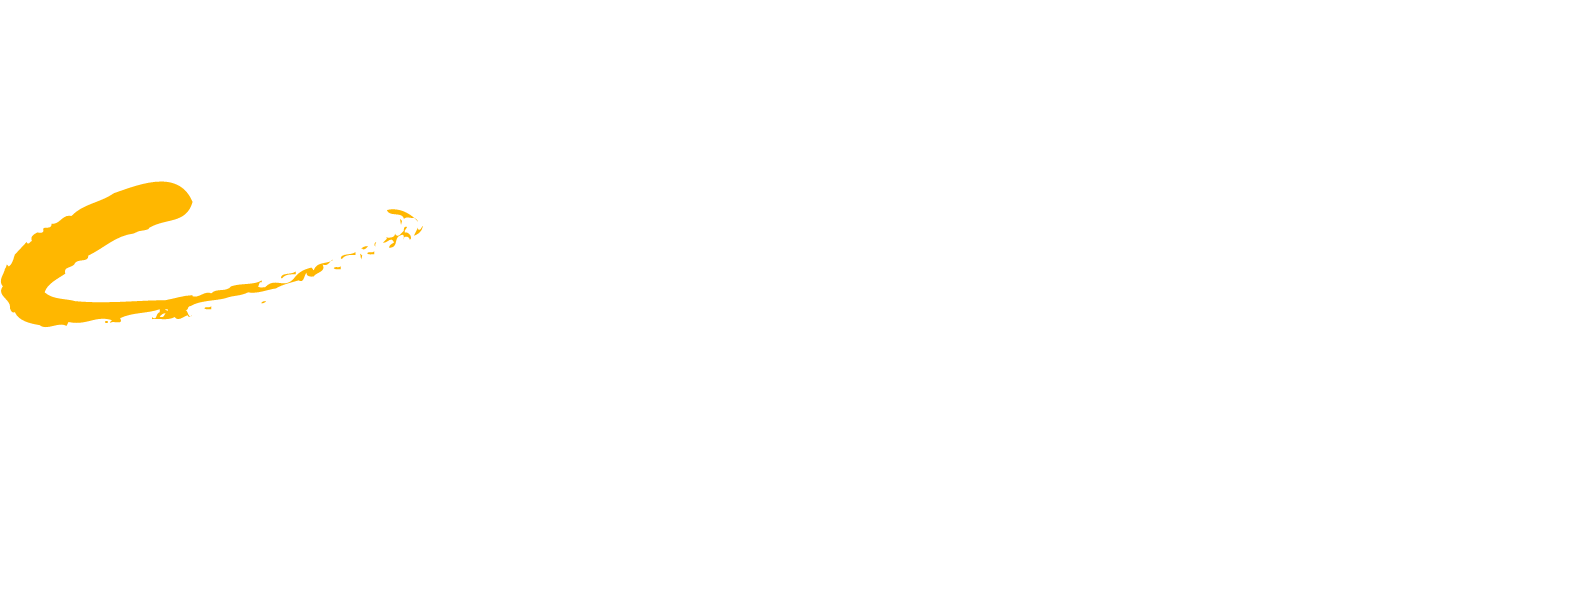 Compass Group logo large for dark backgrounds (transparent PNG)